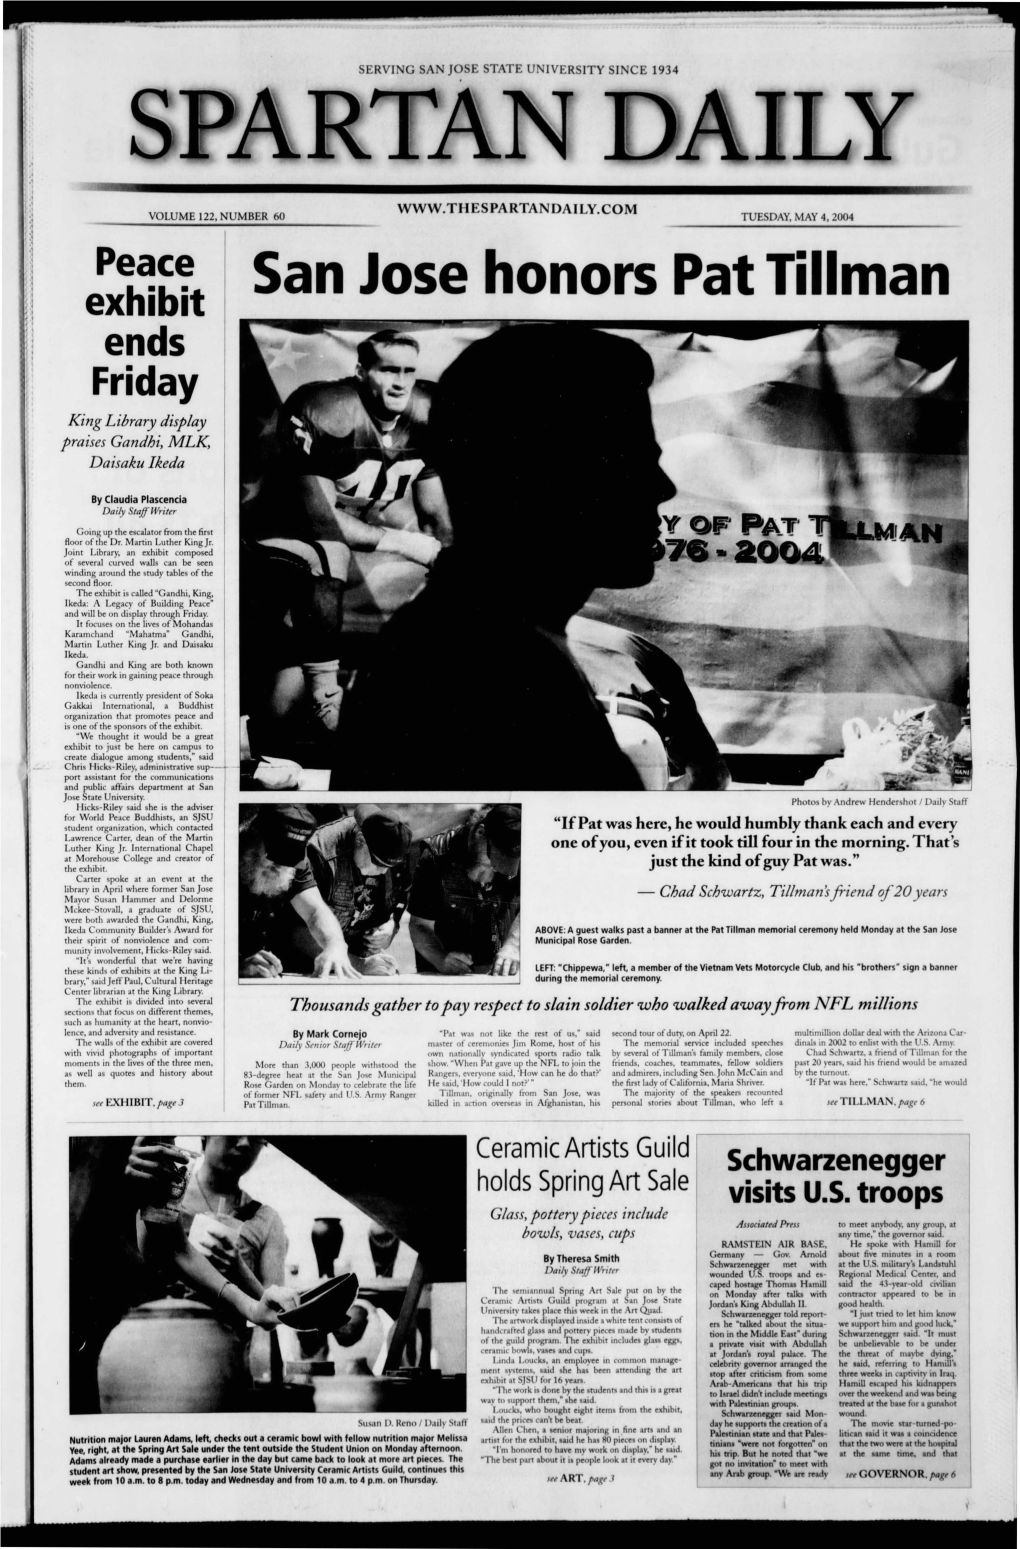 San Jose Honors Pat Tillman Ends Friday King Library Display Praises Gandhi, MLK, Daisaku Ikeda